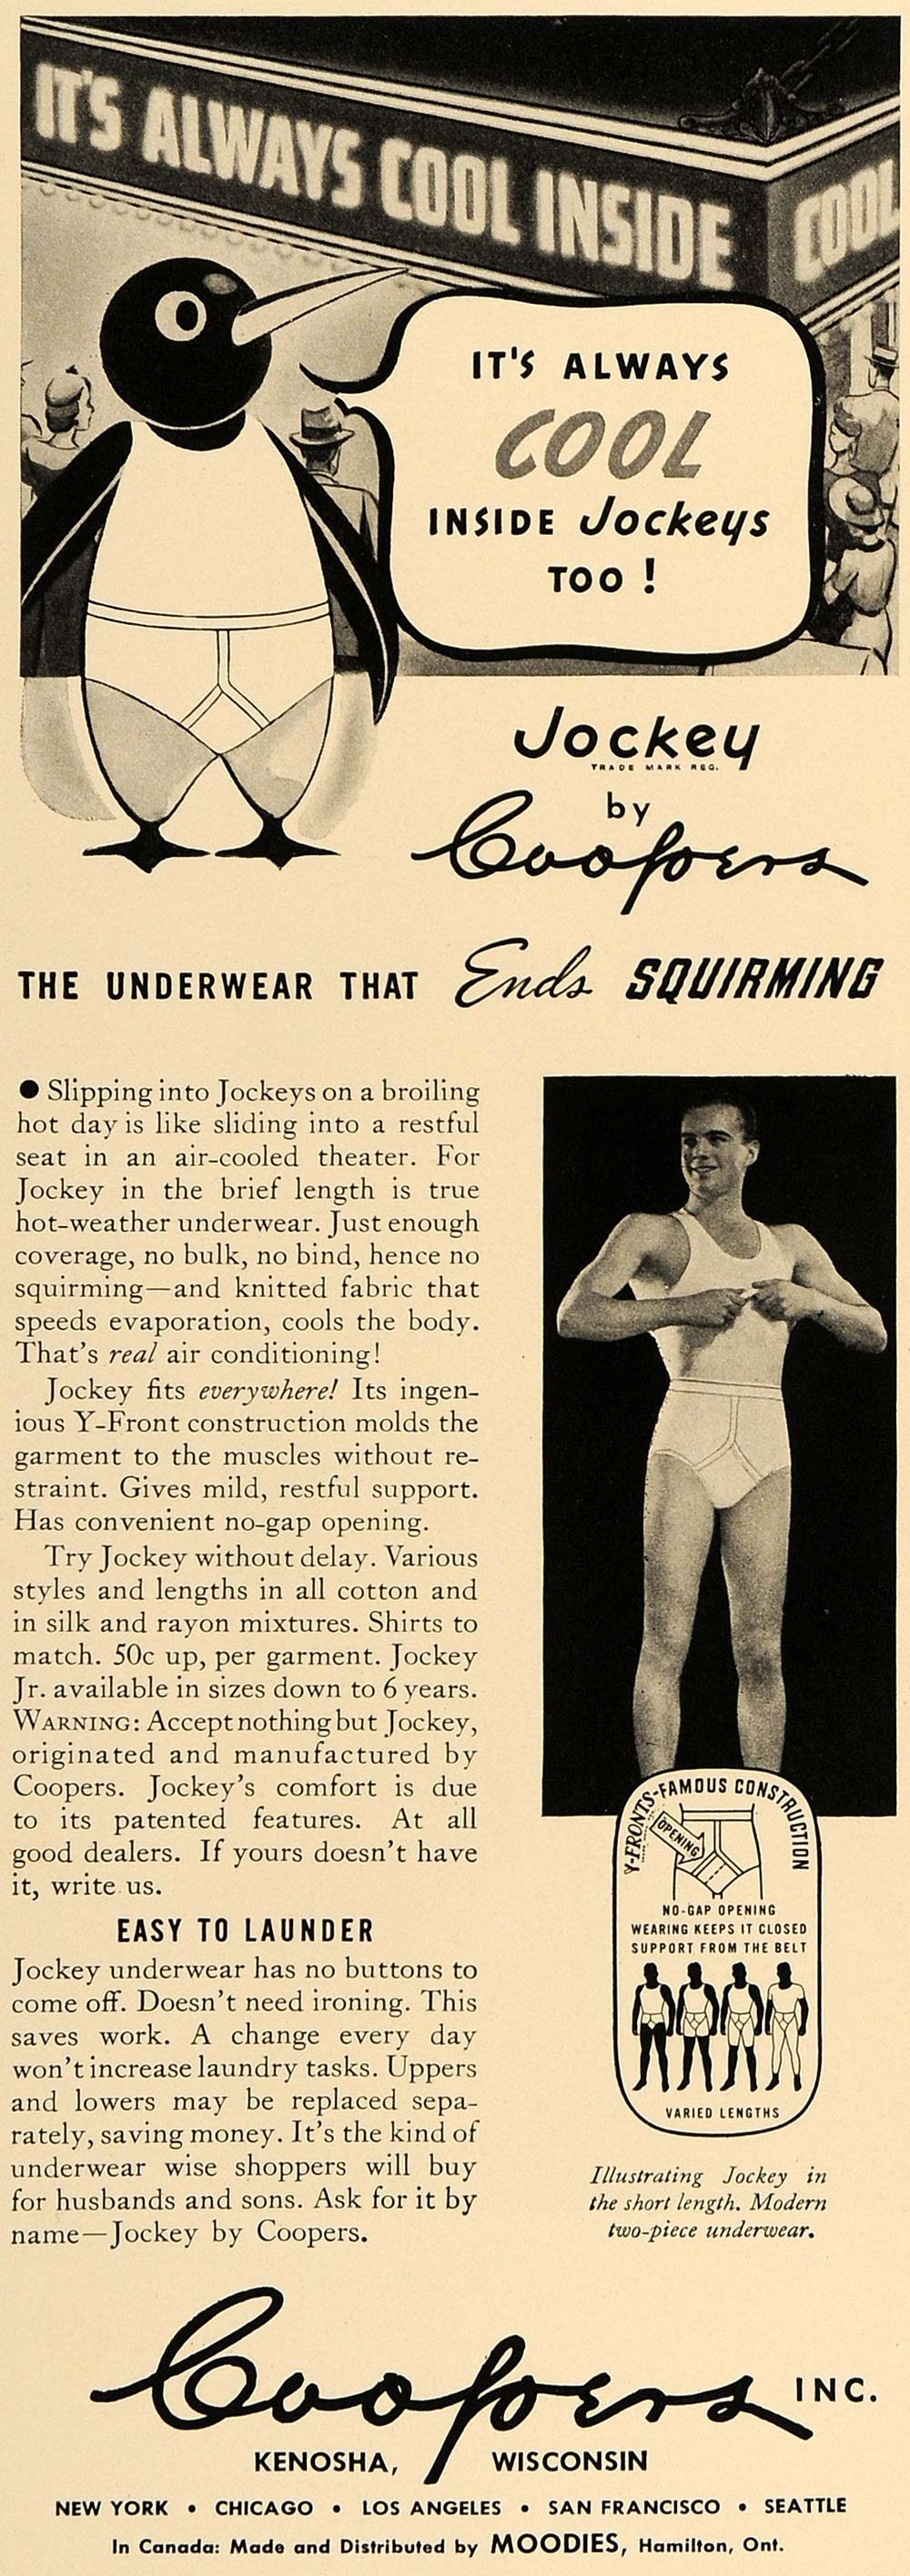 1947 Ad Coopers Inc. Jockey Underwear Fireman Uniform - ORIGINAL